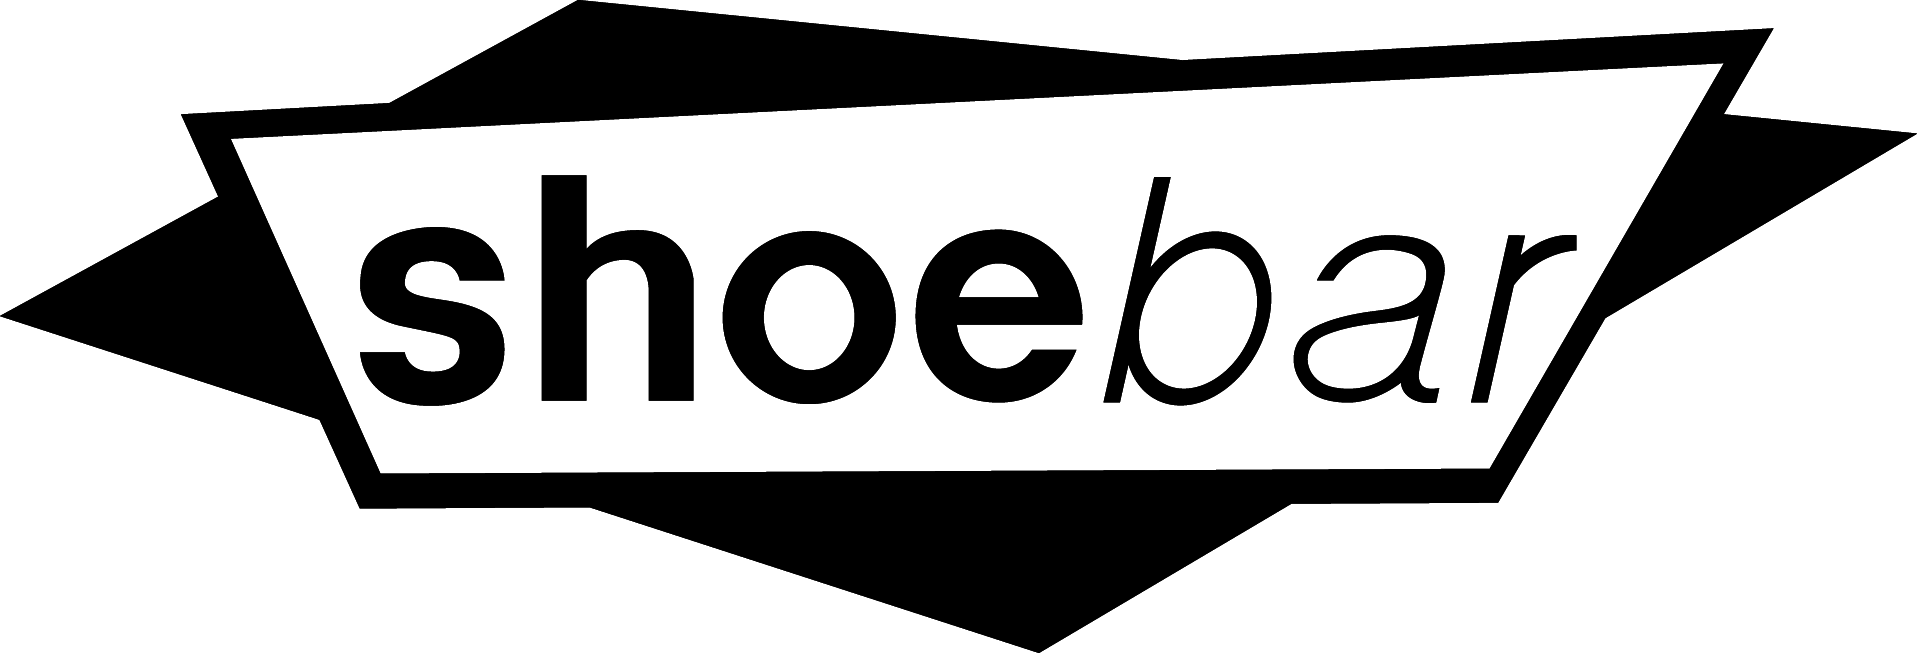 Shoebar Logo BLACK.png